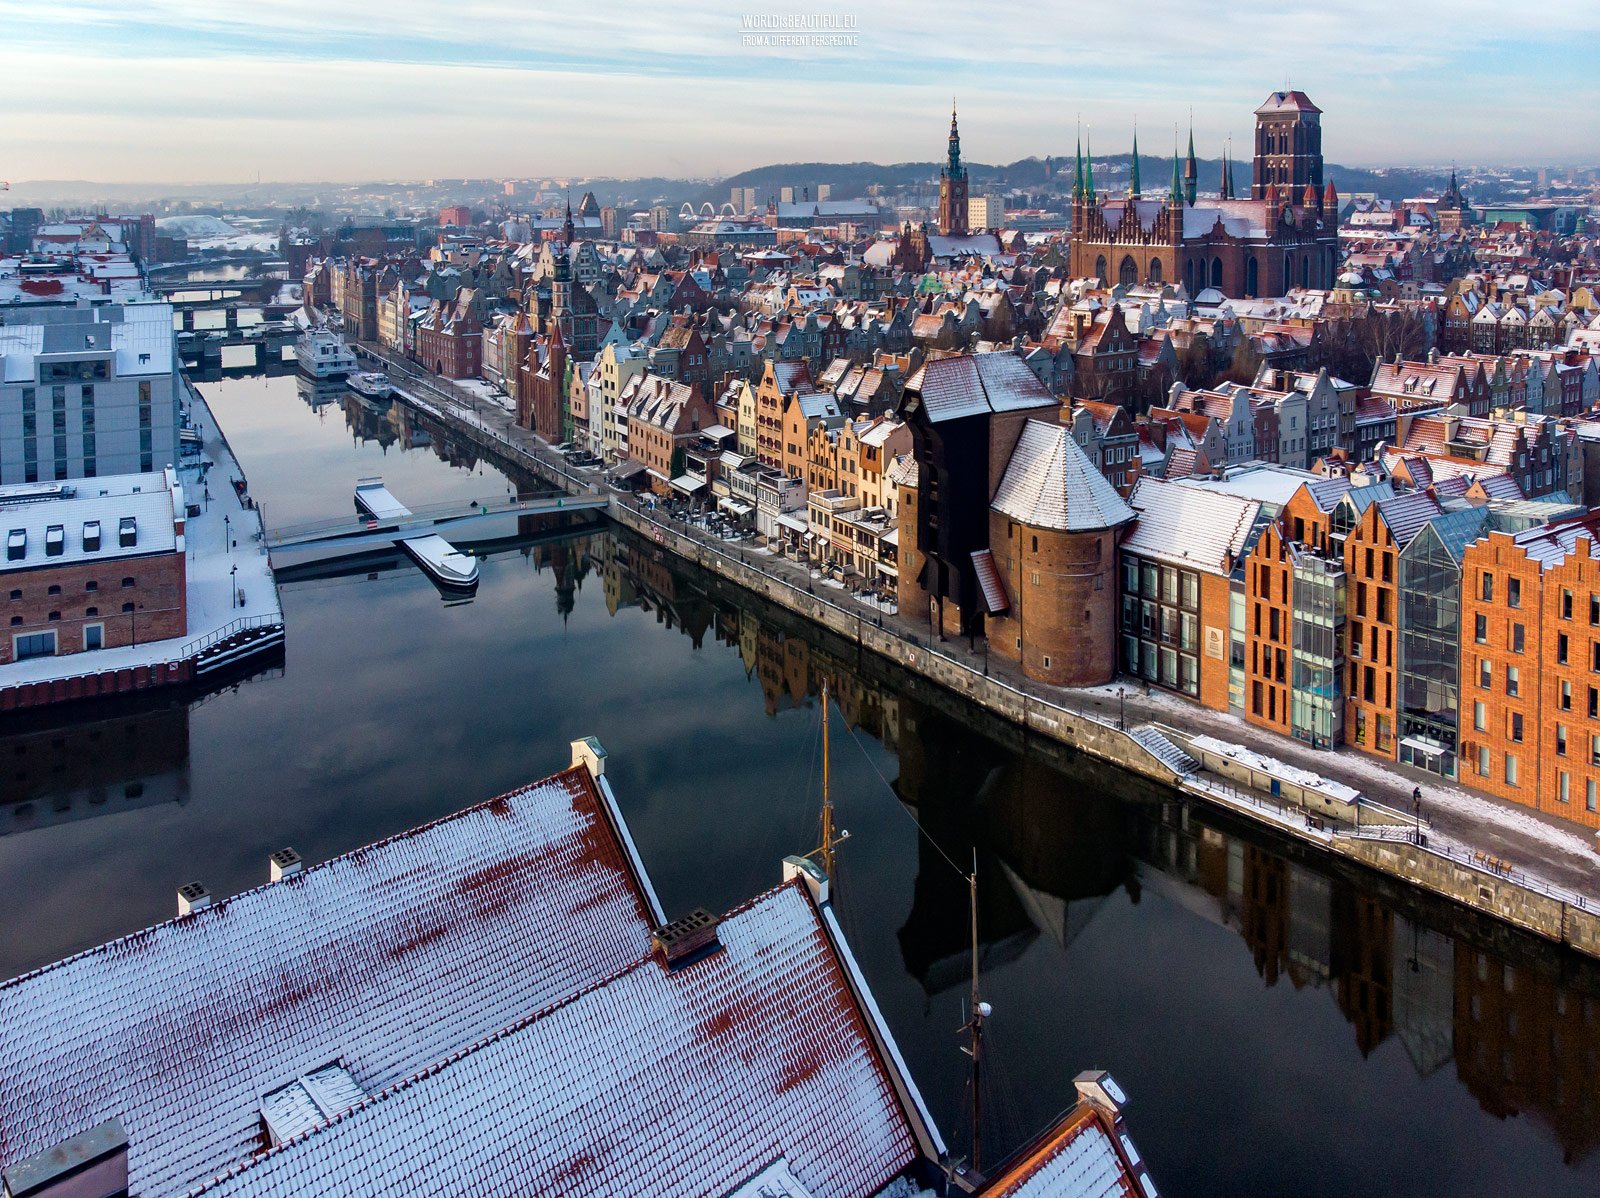 Gdańsk city center in winter